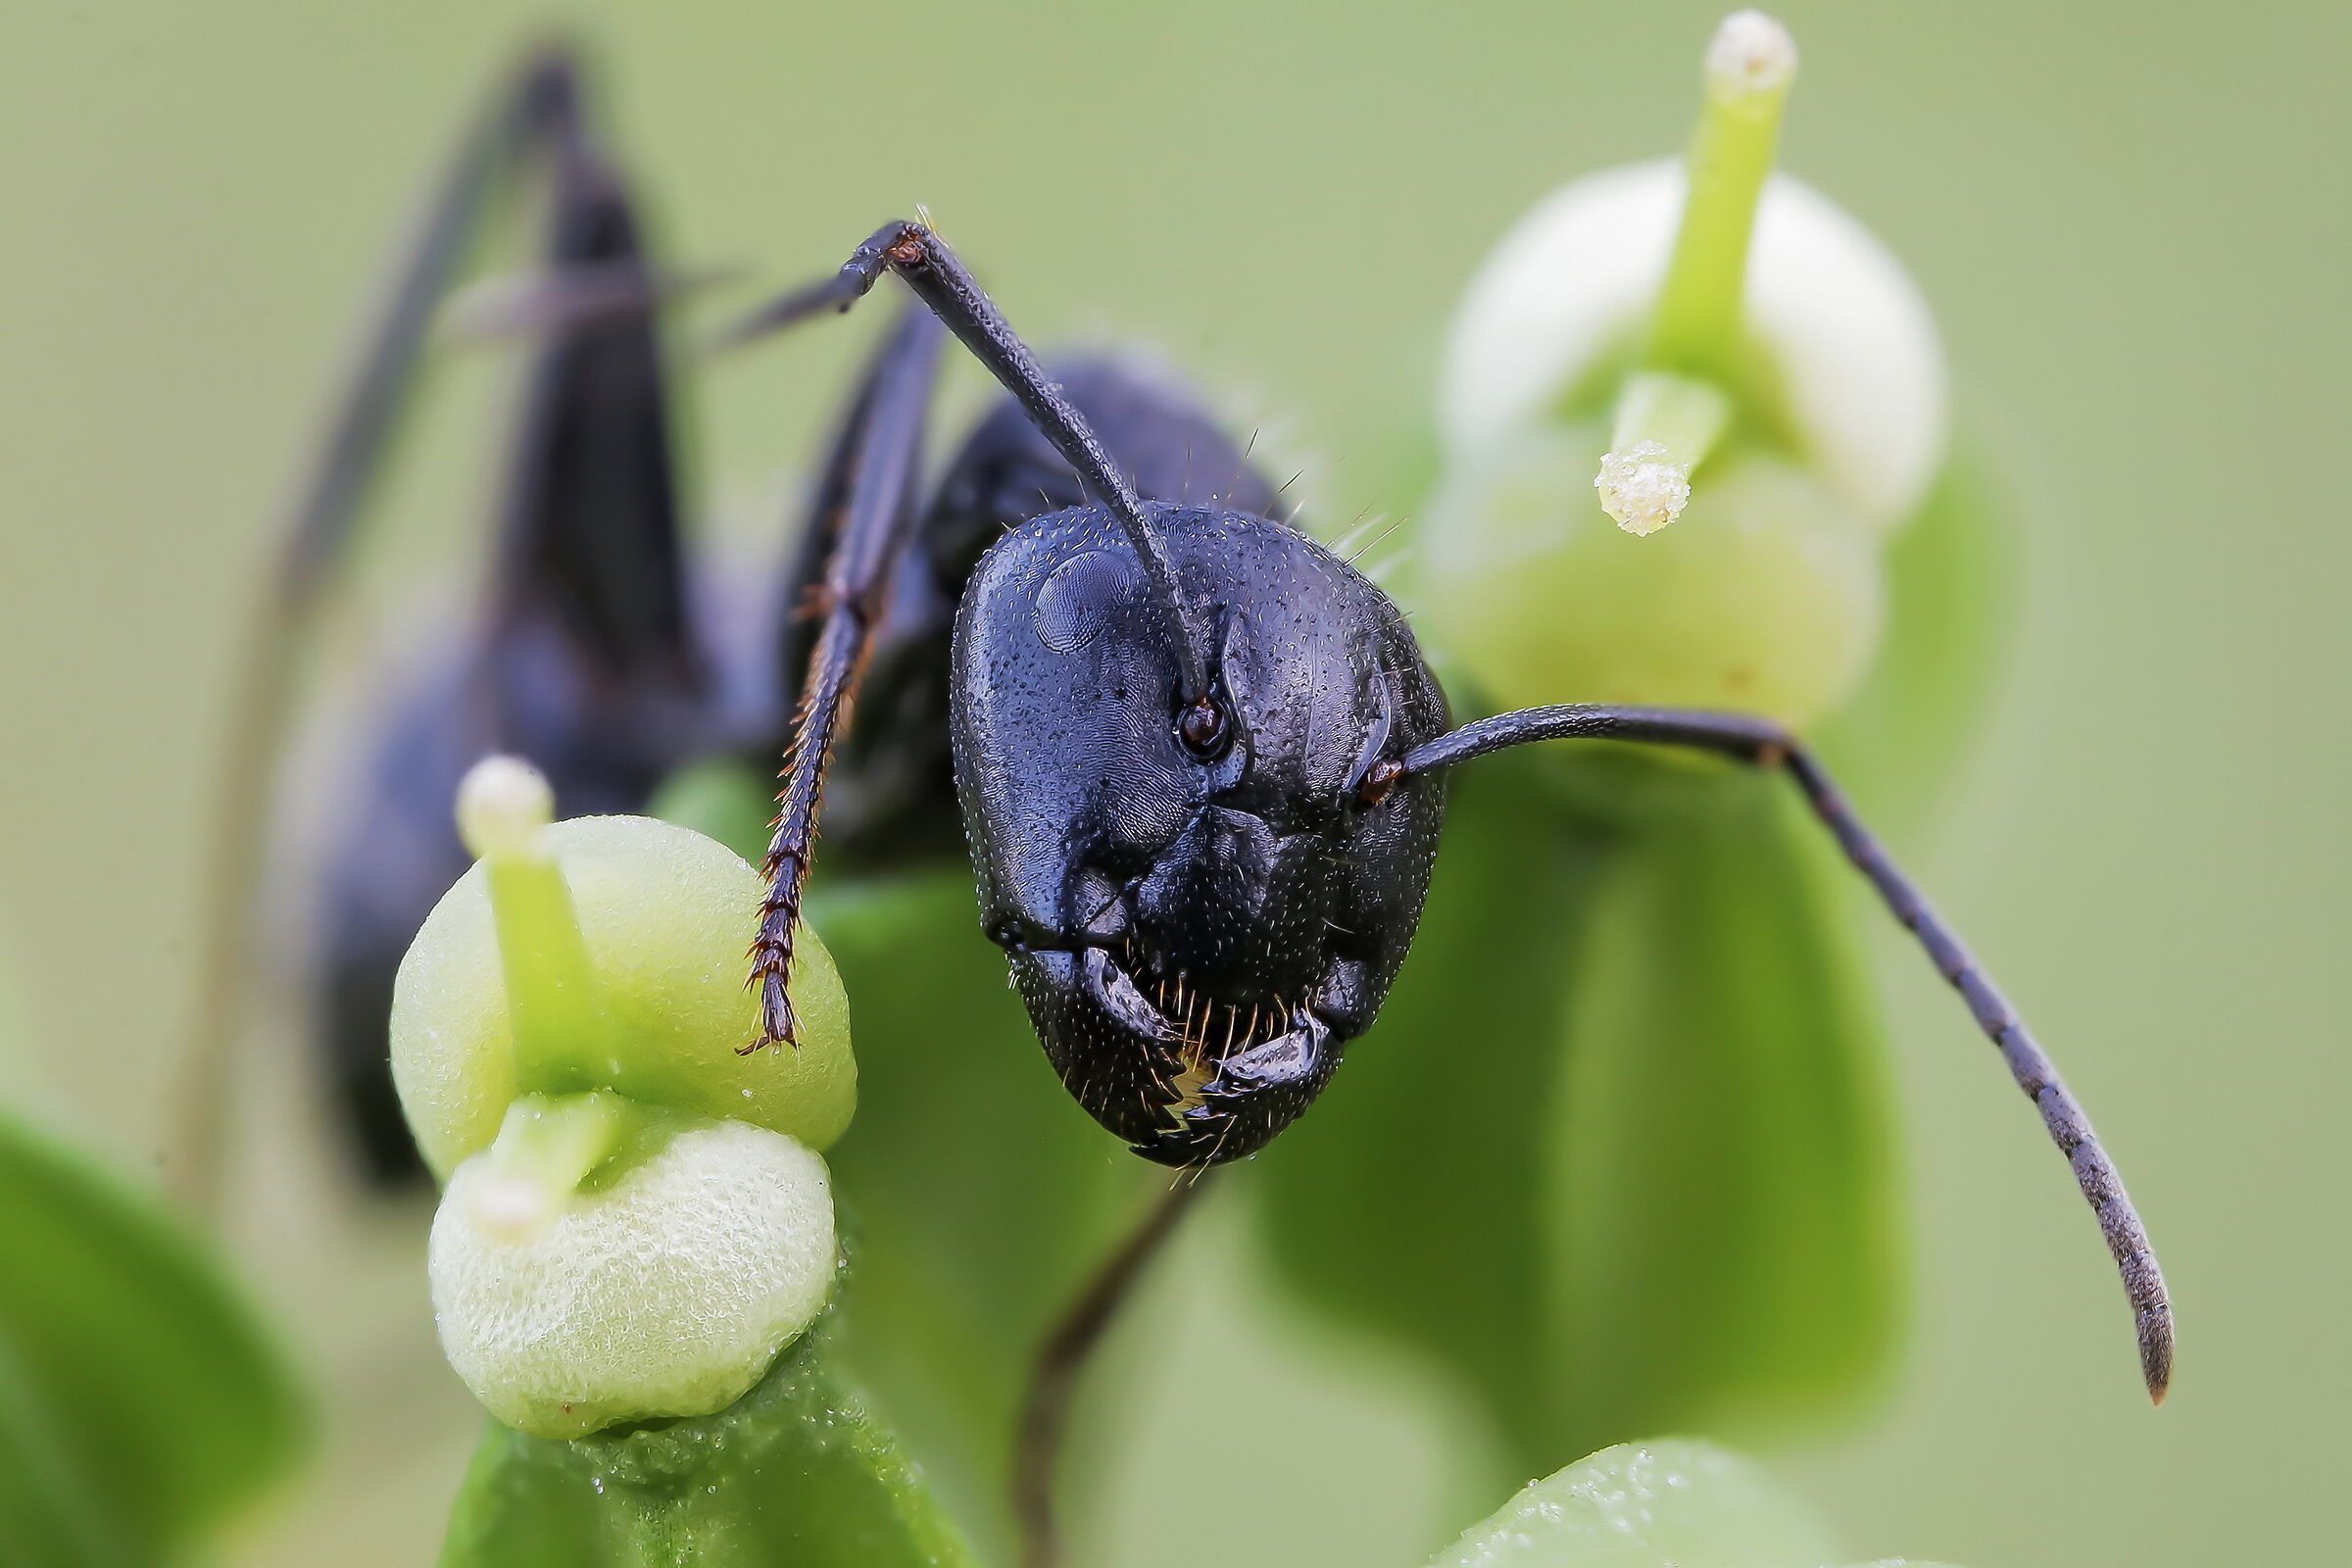 The Big Ant (Camponotus sp.)...